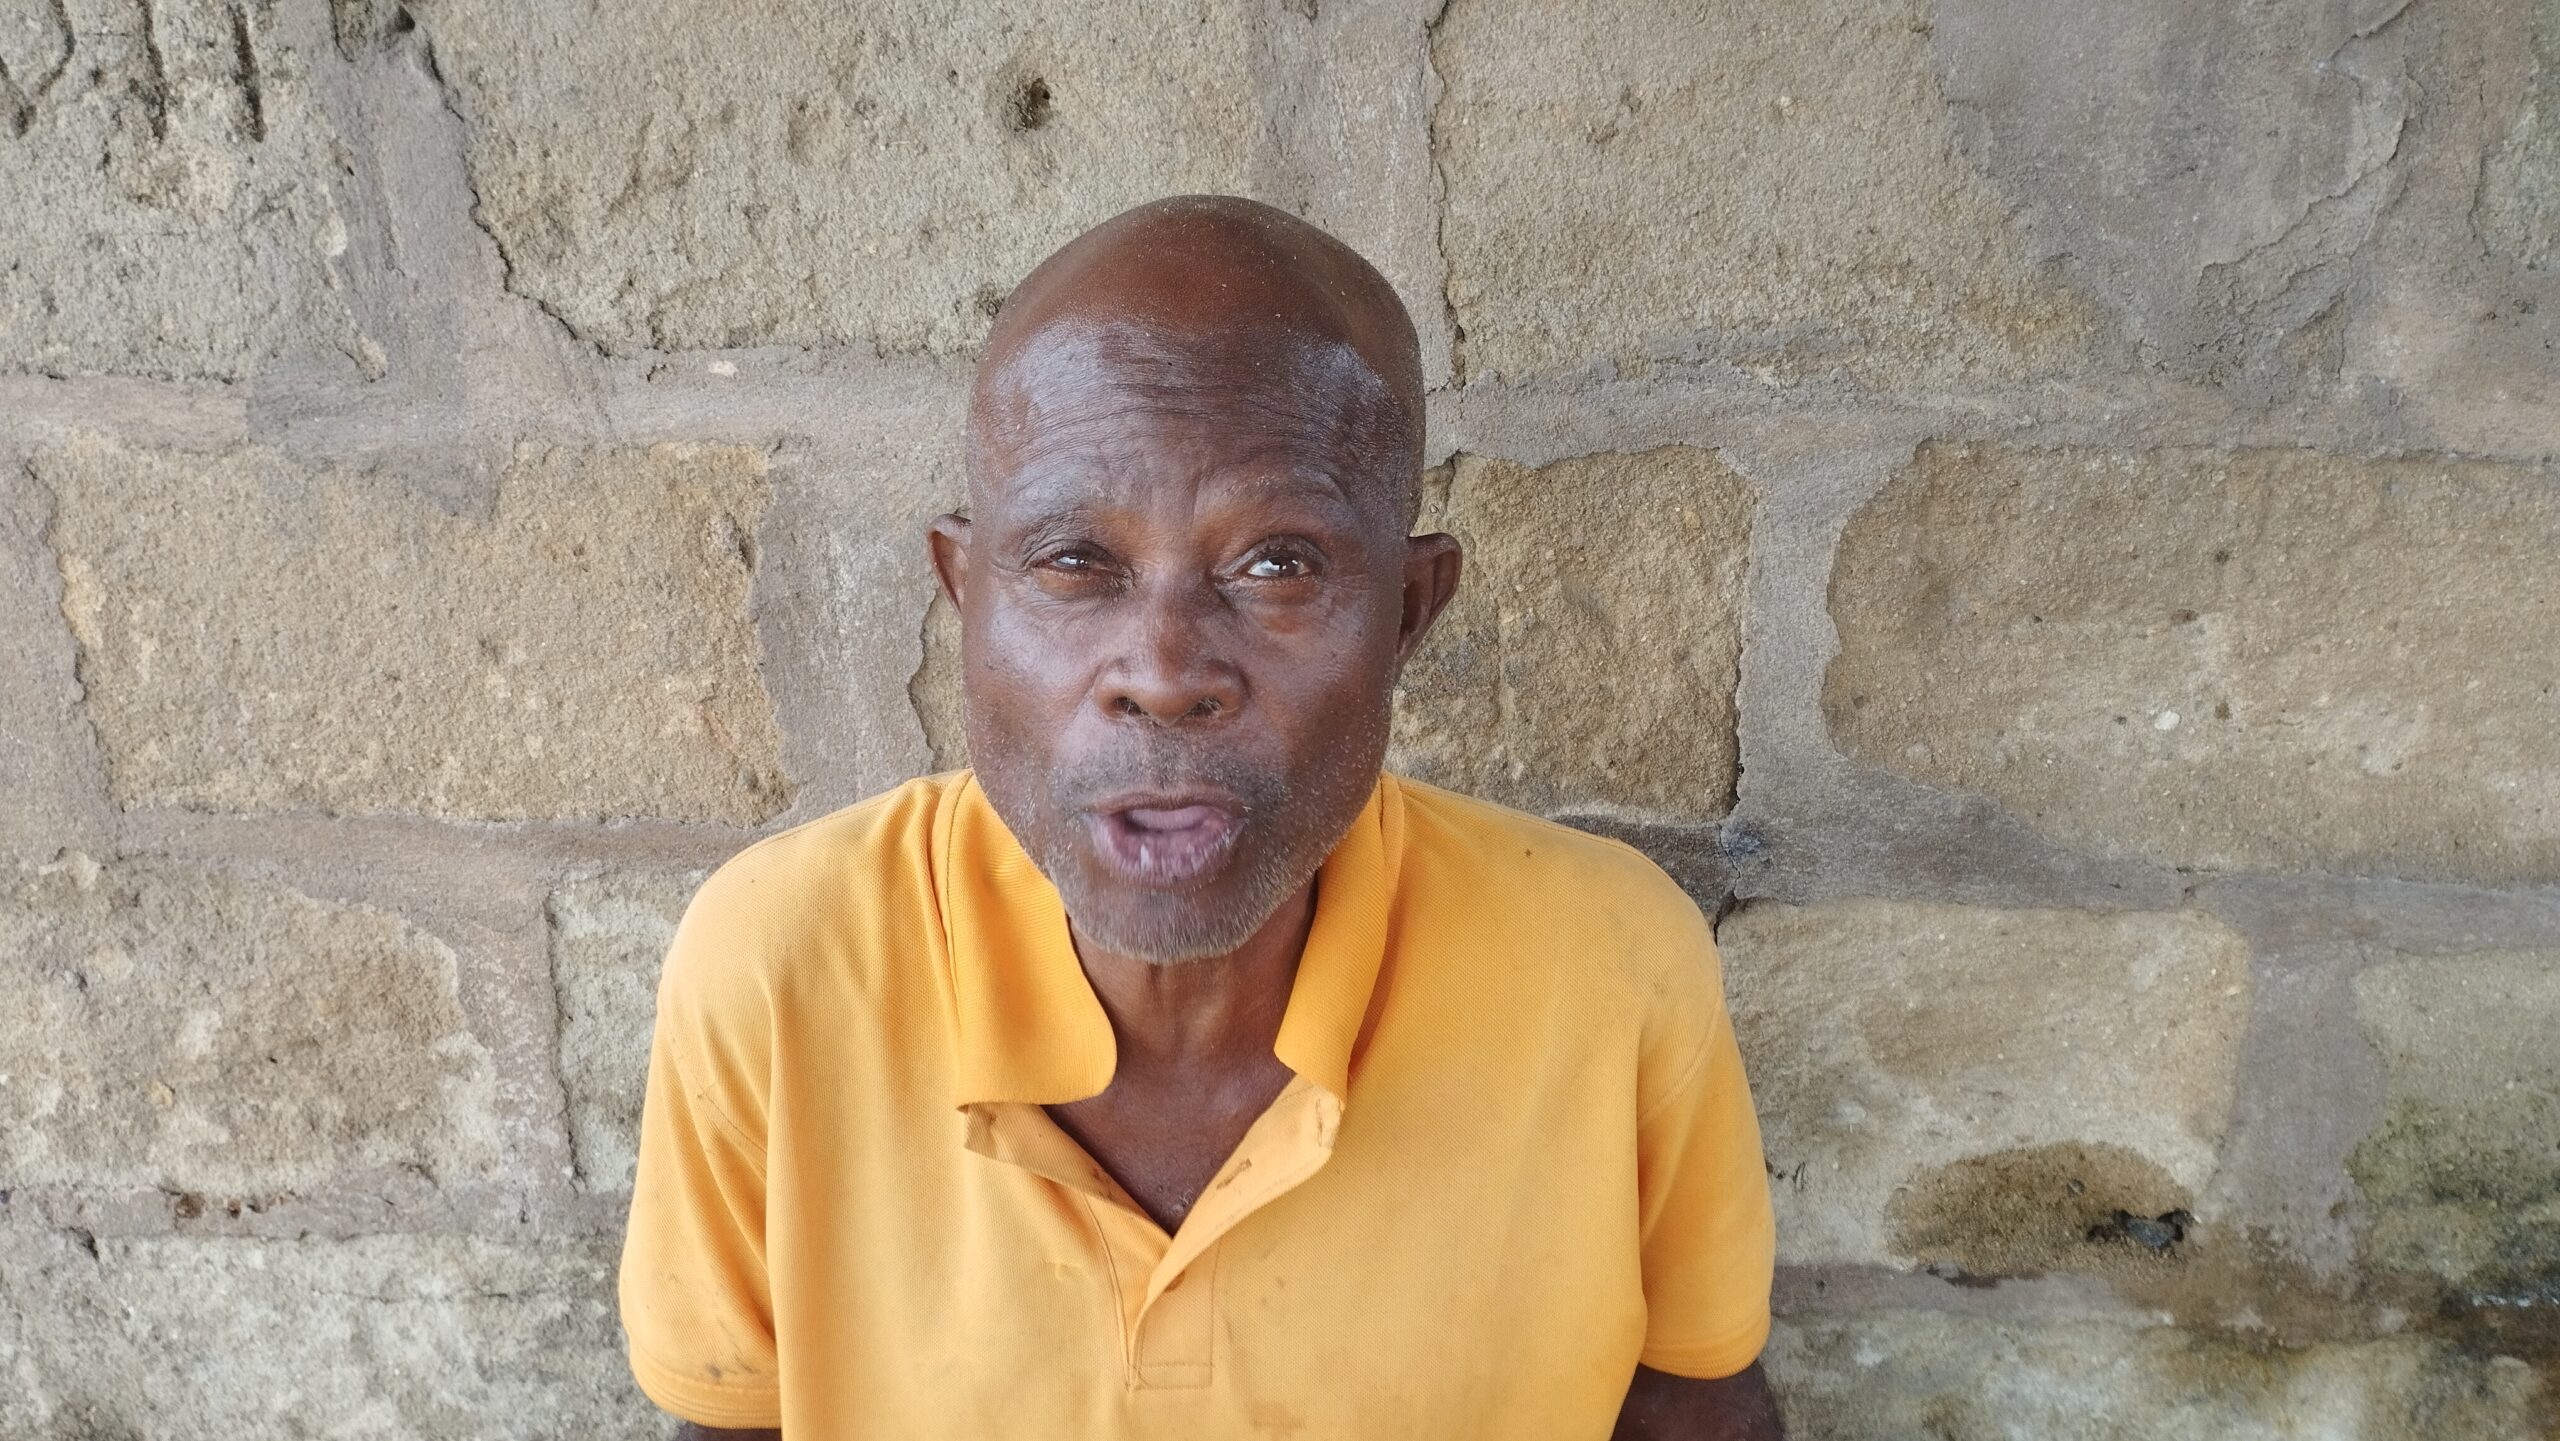 Ikechukwu Onyiro, a community leader and farmer